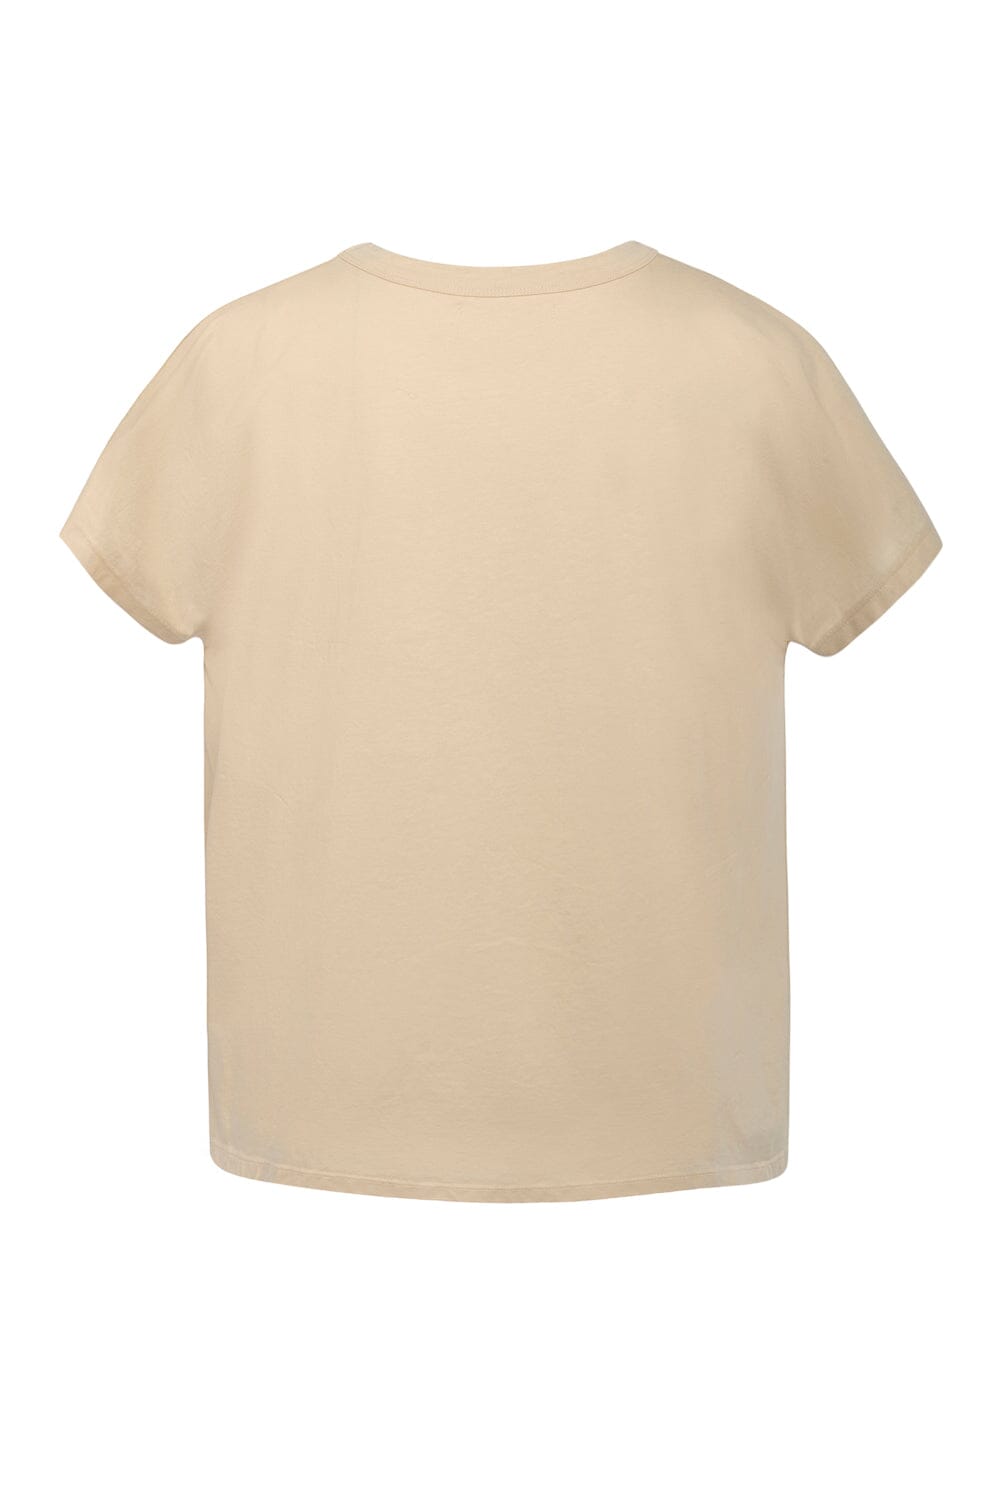 ArnieSays: Jace Cotton Sand T-shirt